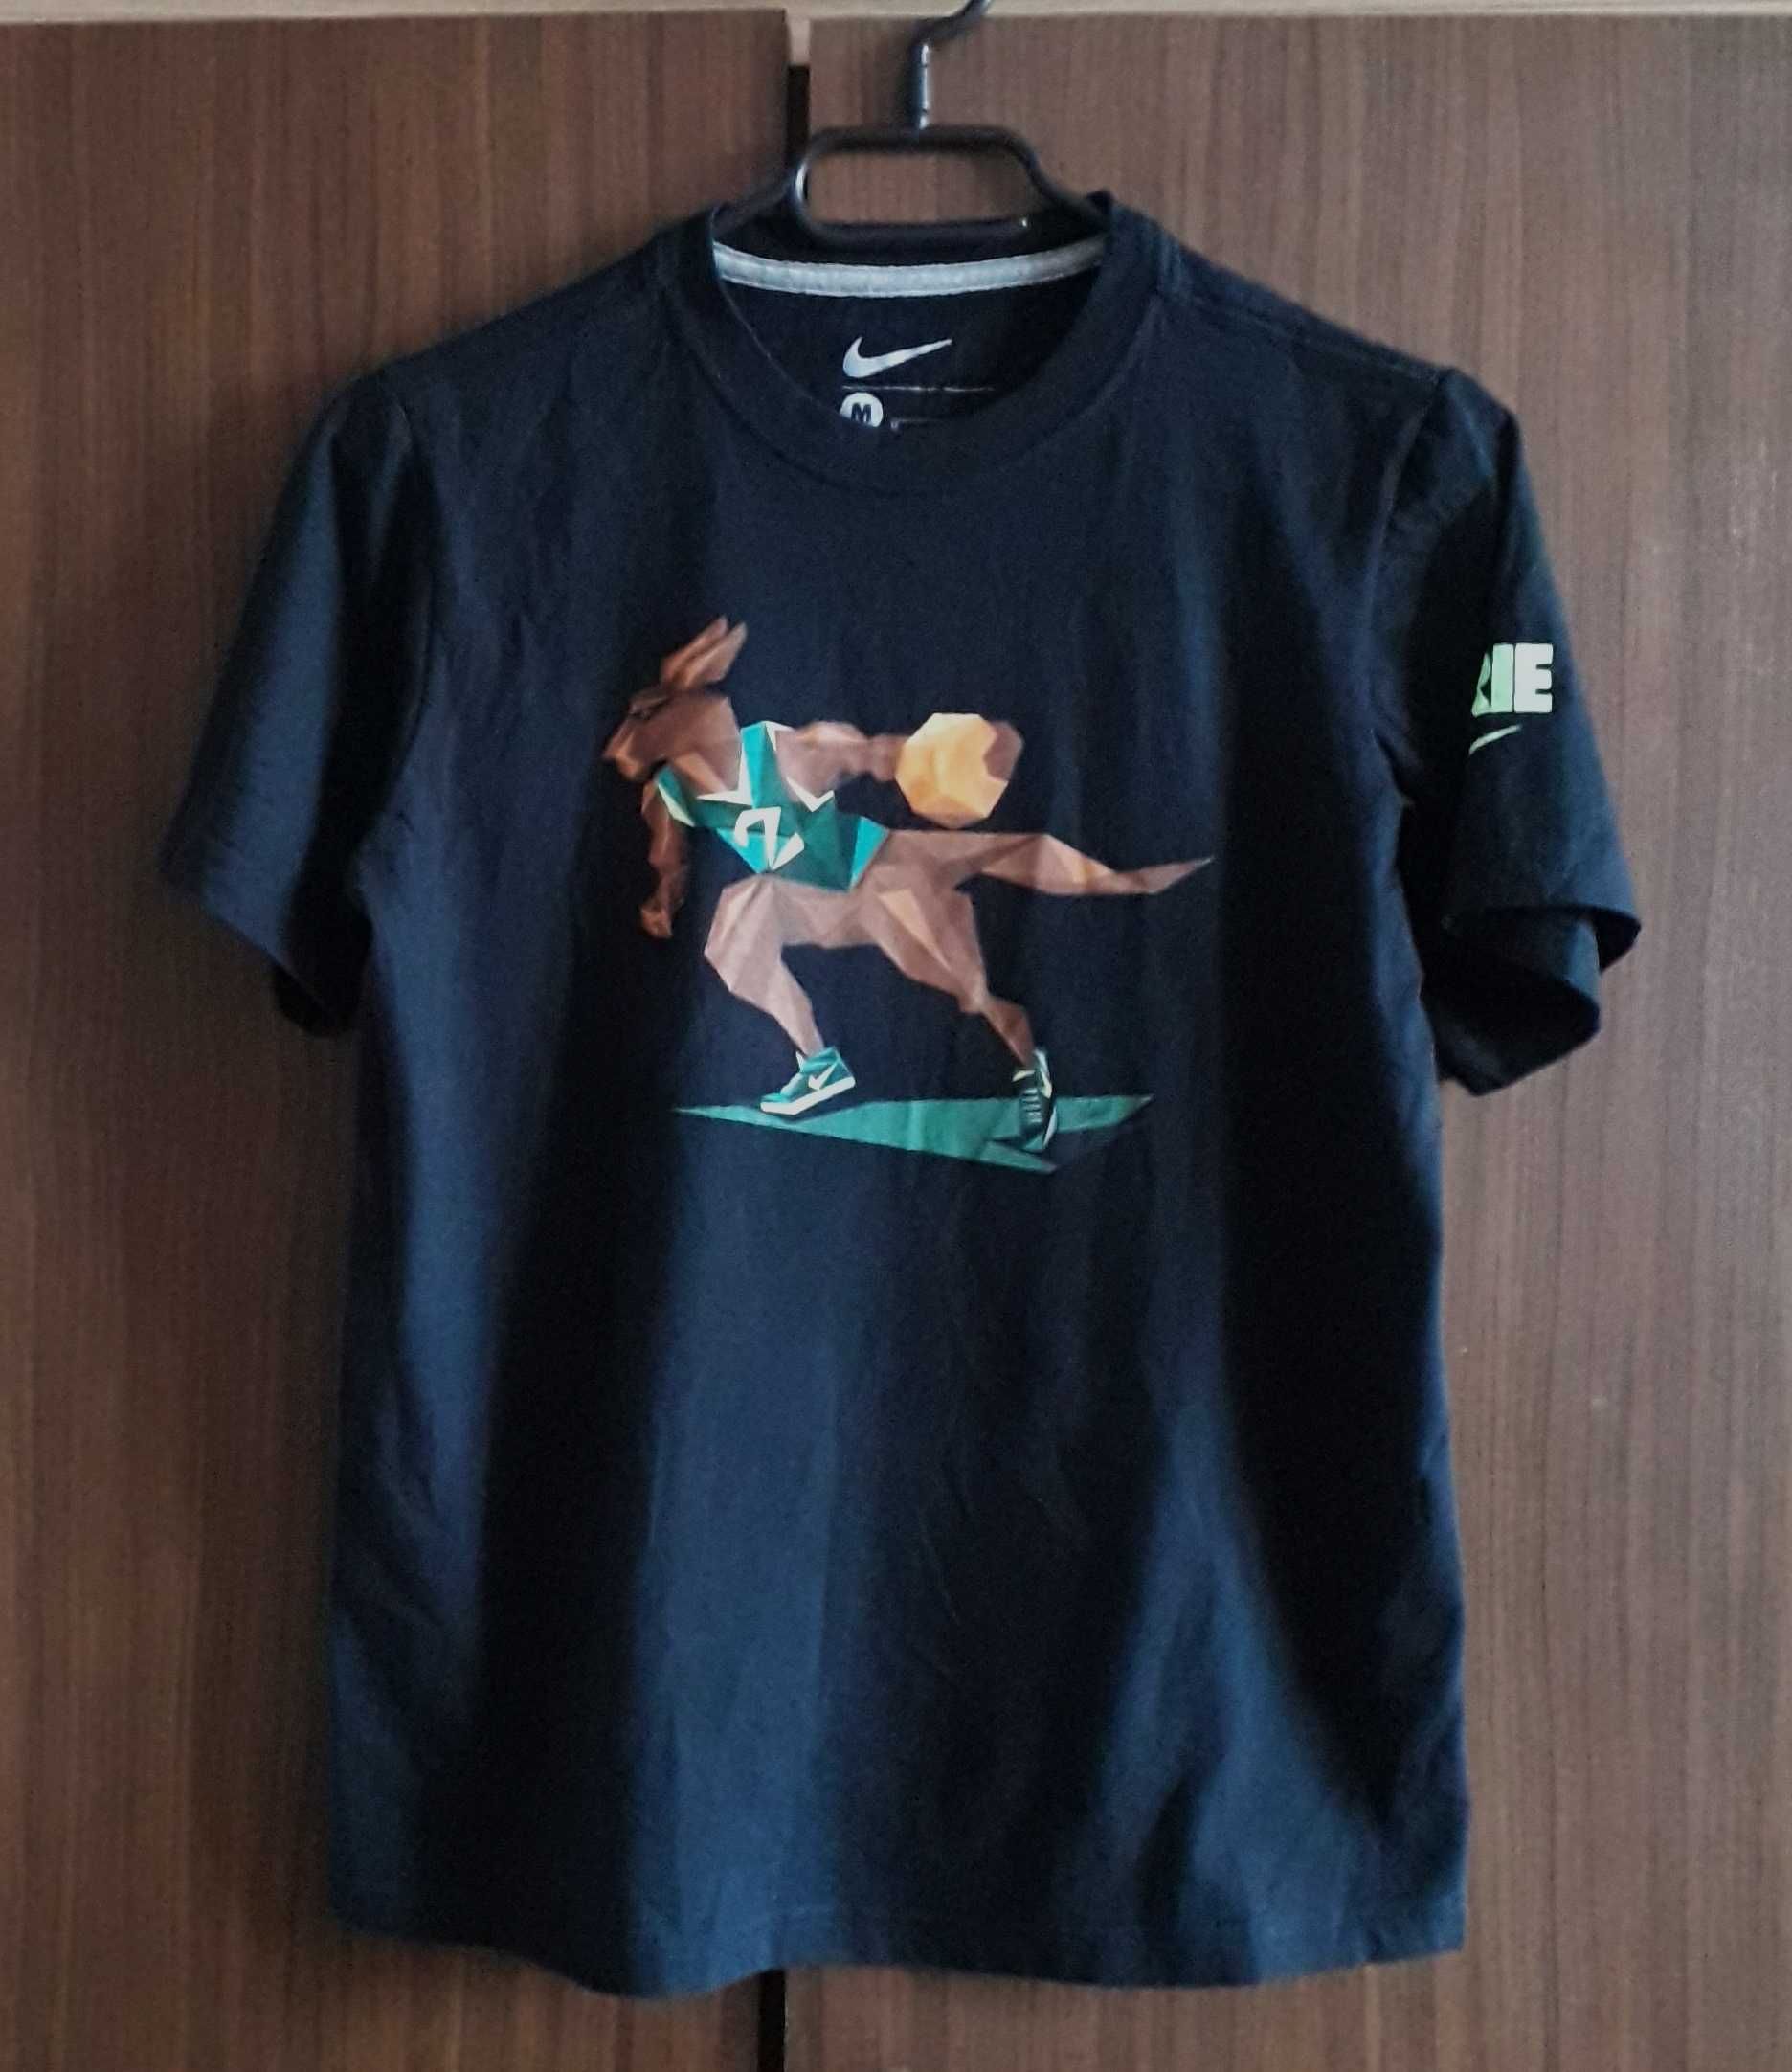 Czarna damska/męska koszulka Nike z kangurem Rozmiar S/36